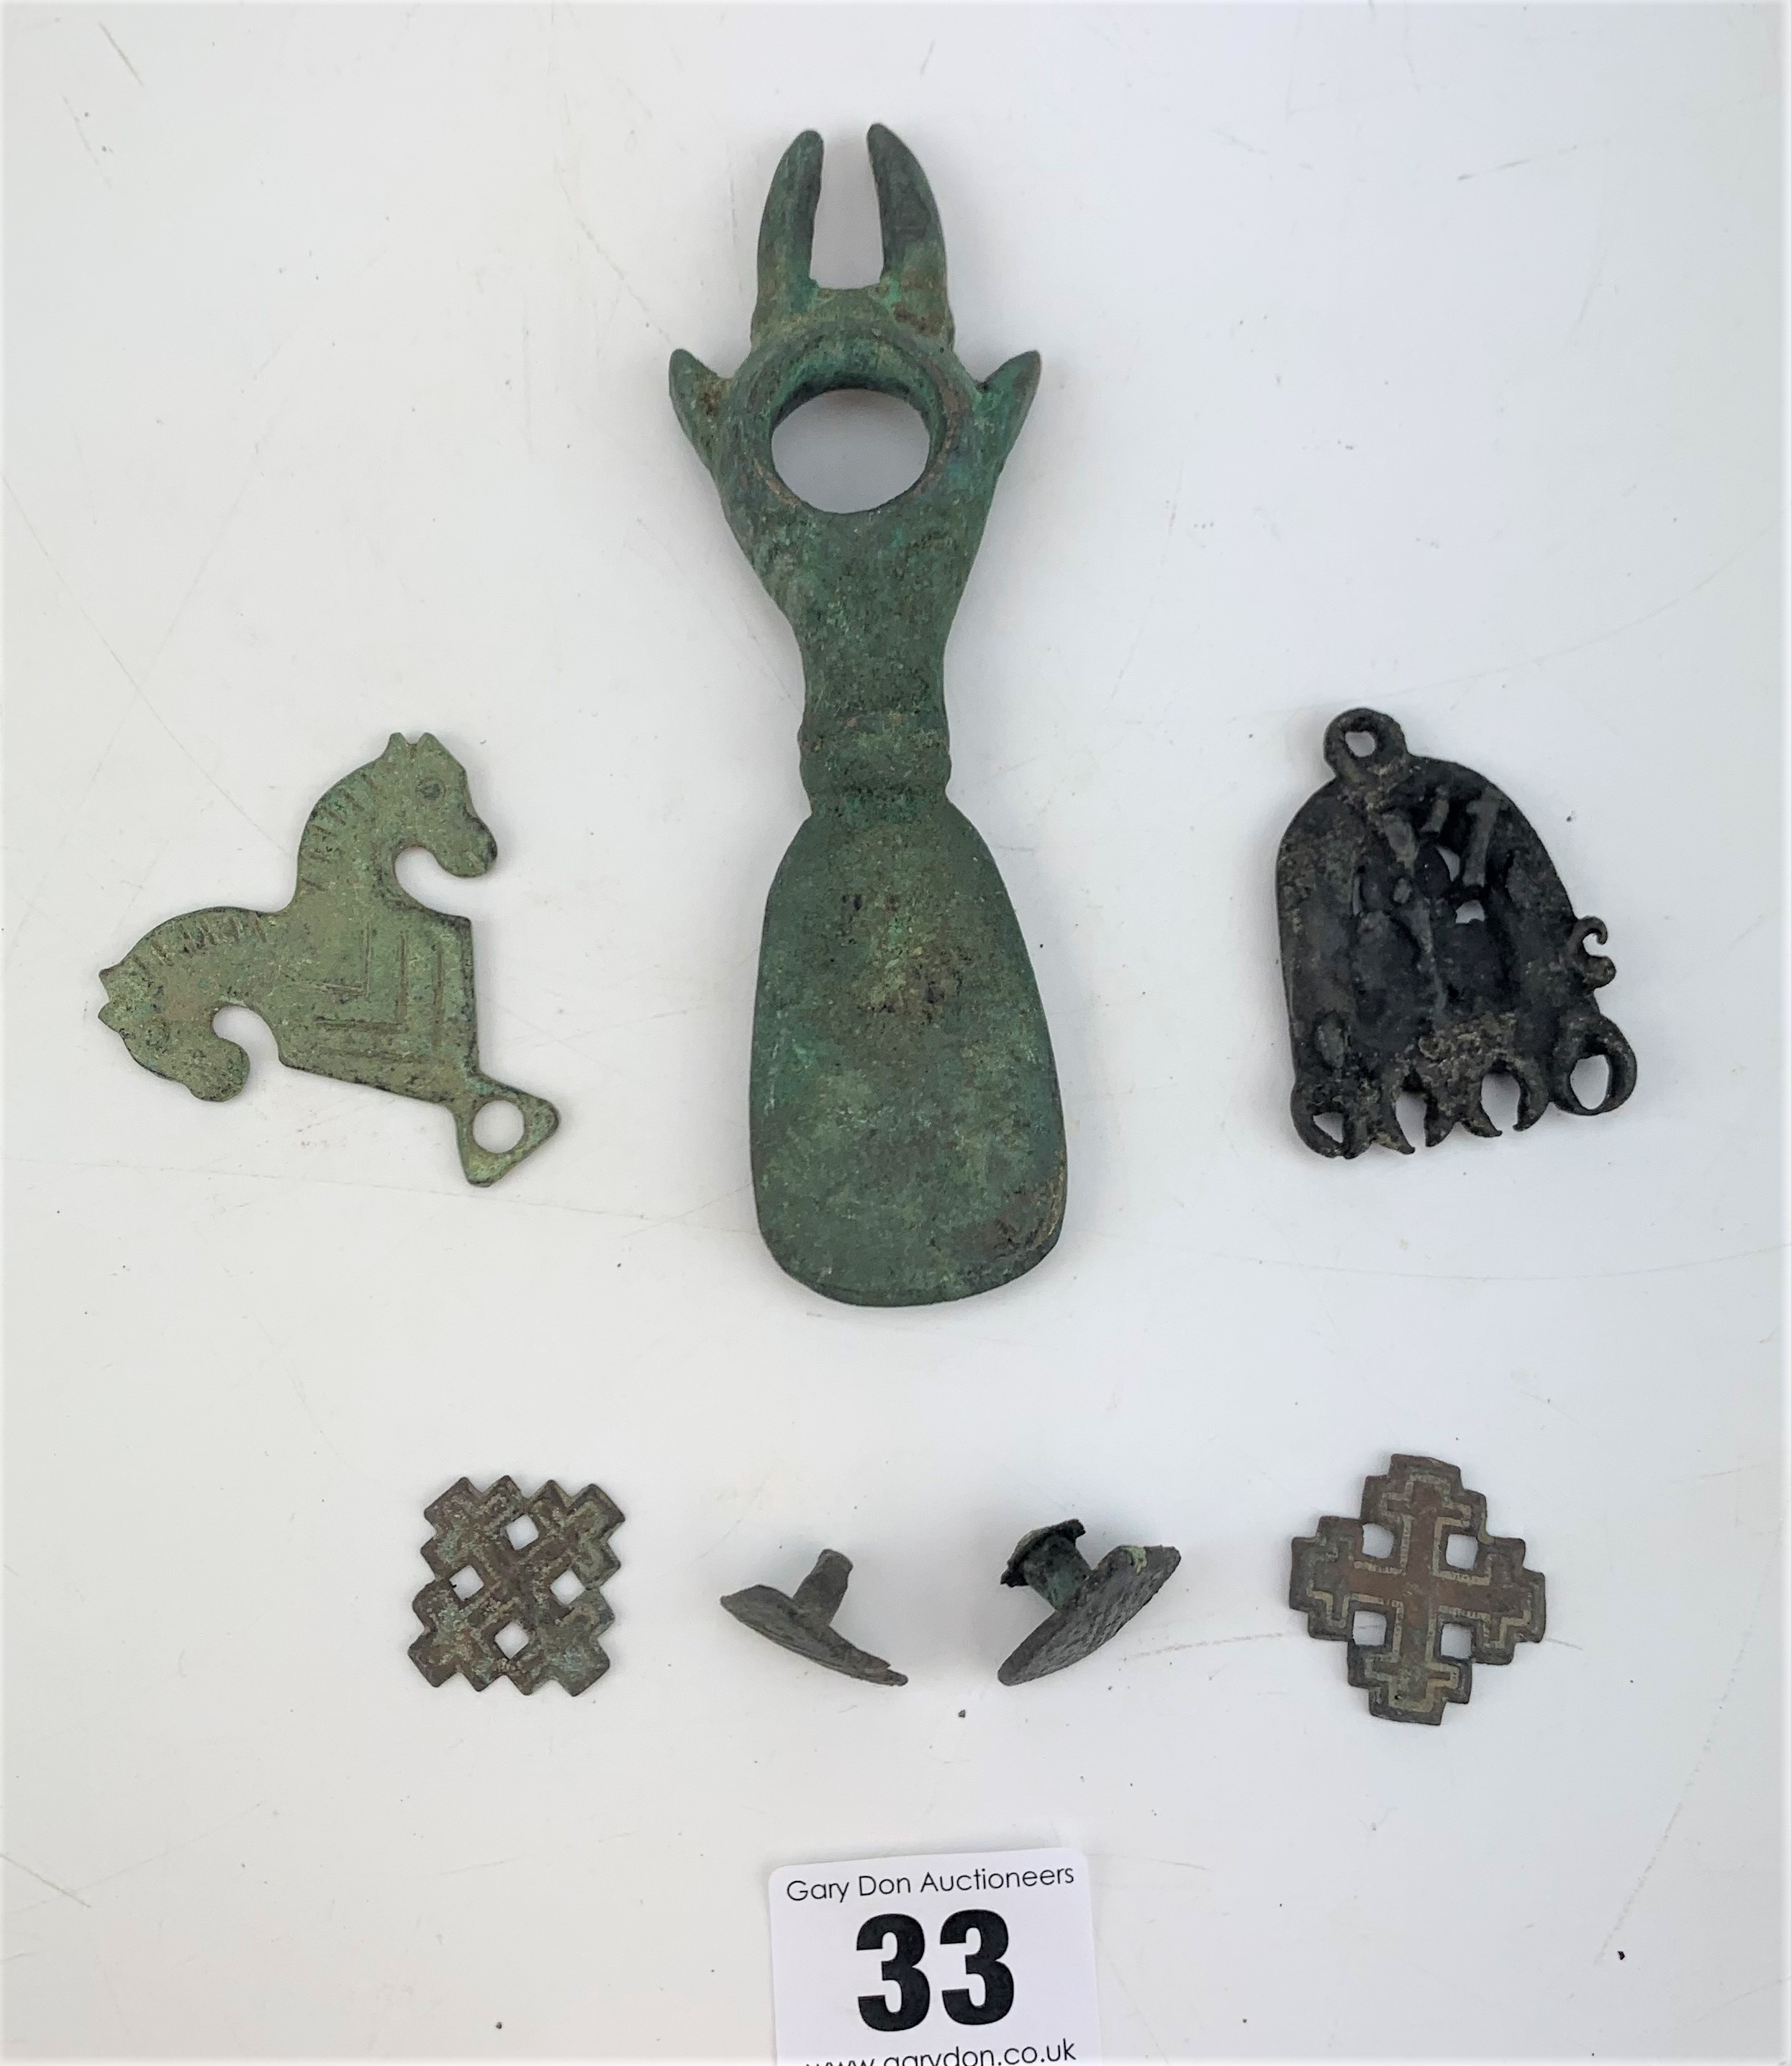 Medieval studs, 2 Crusader badges, bottle opener and metal items